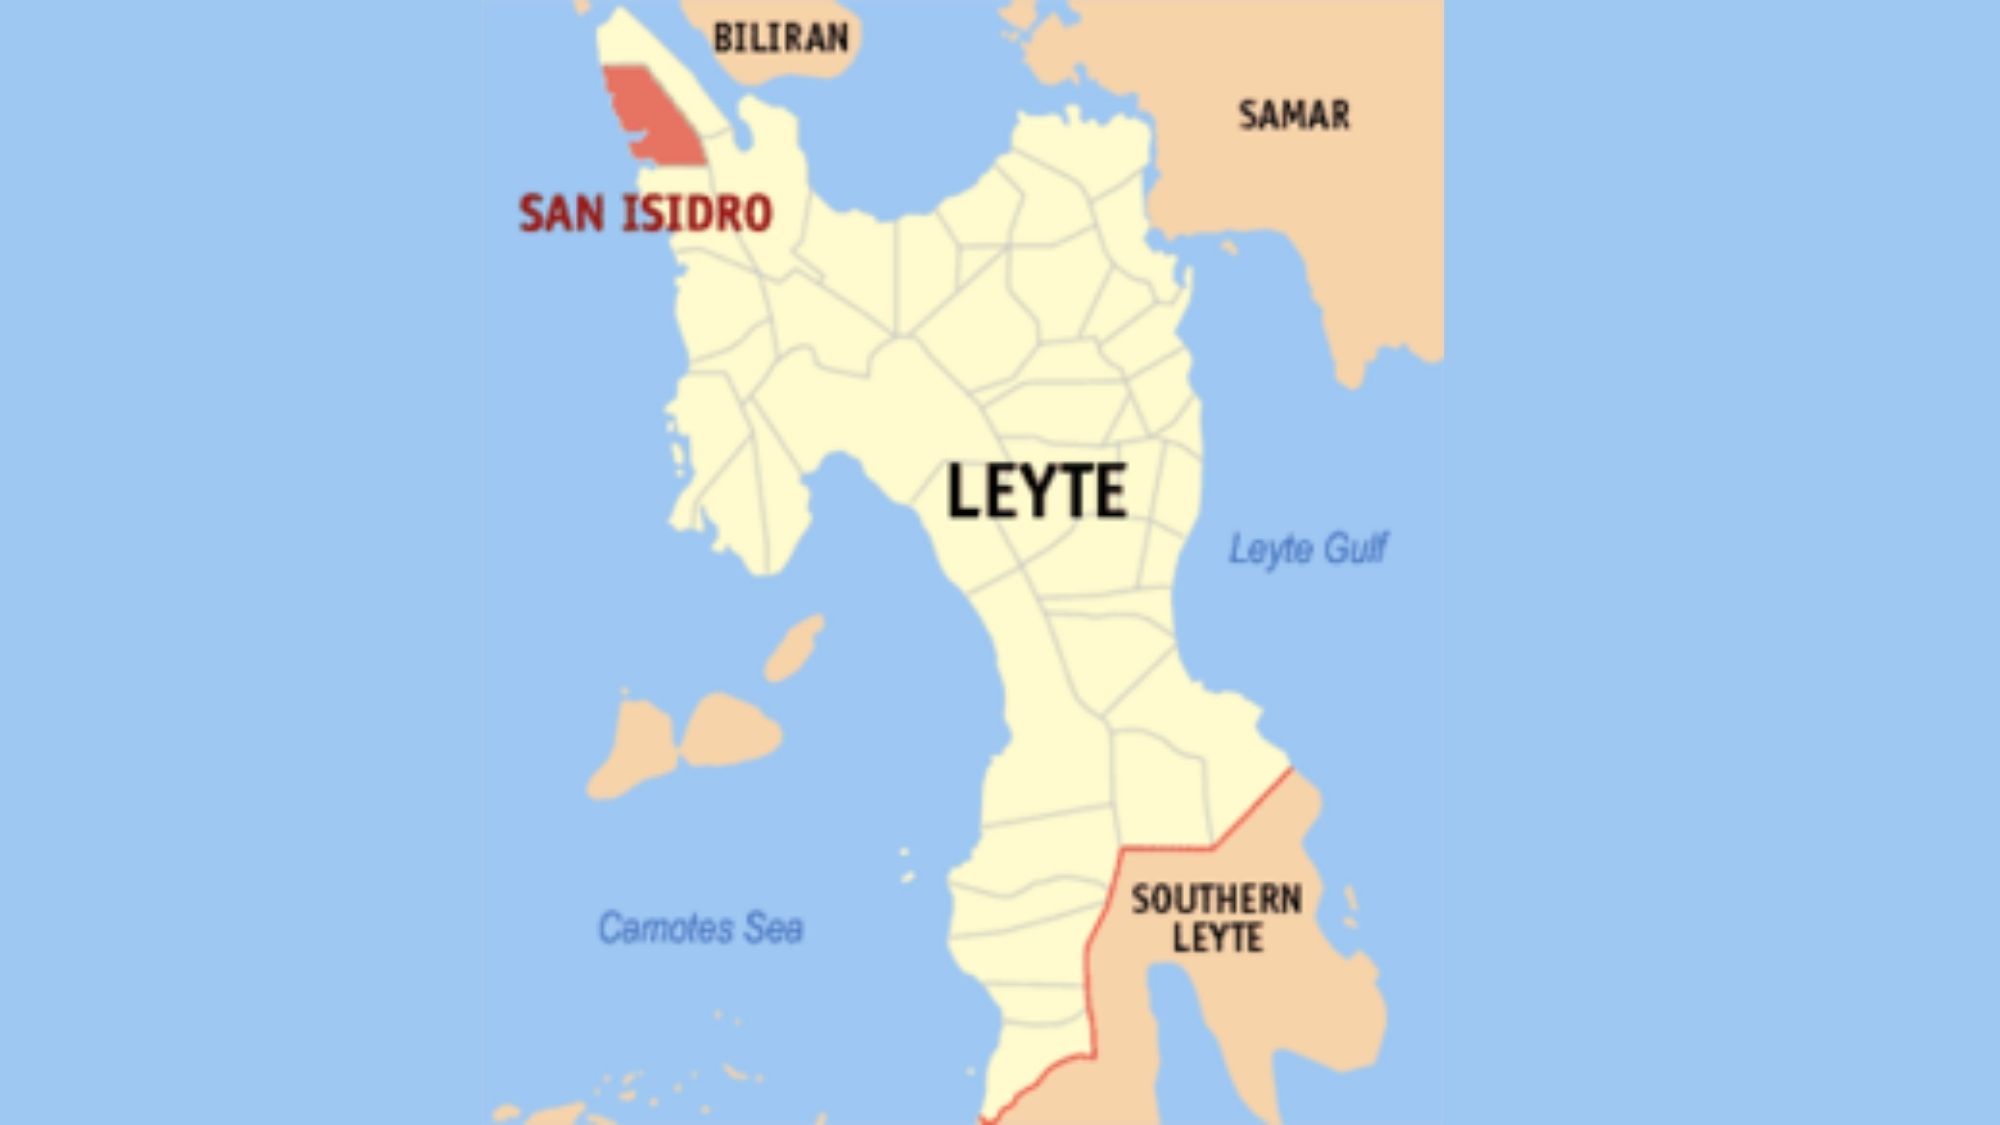 San Isidro, Leyte